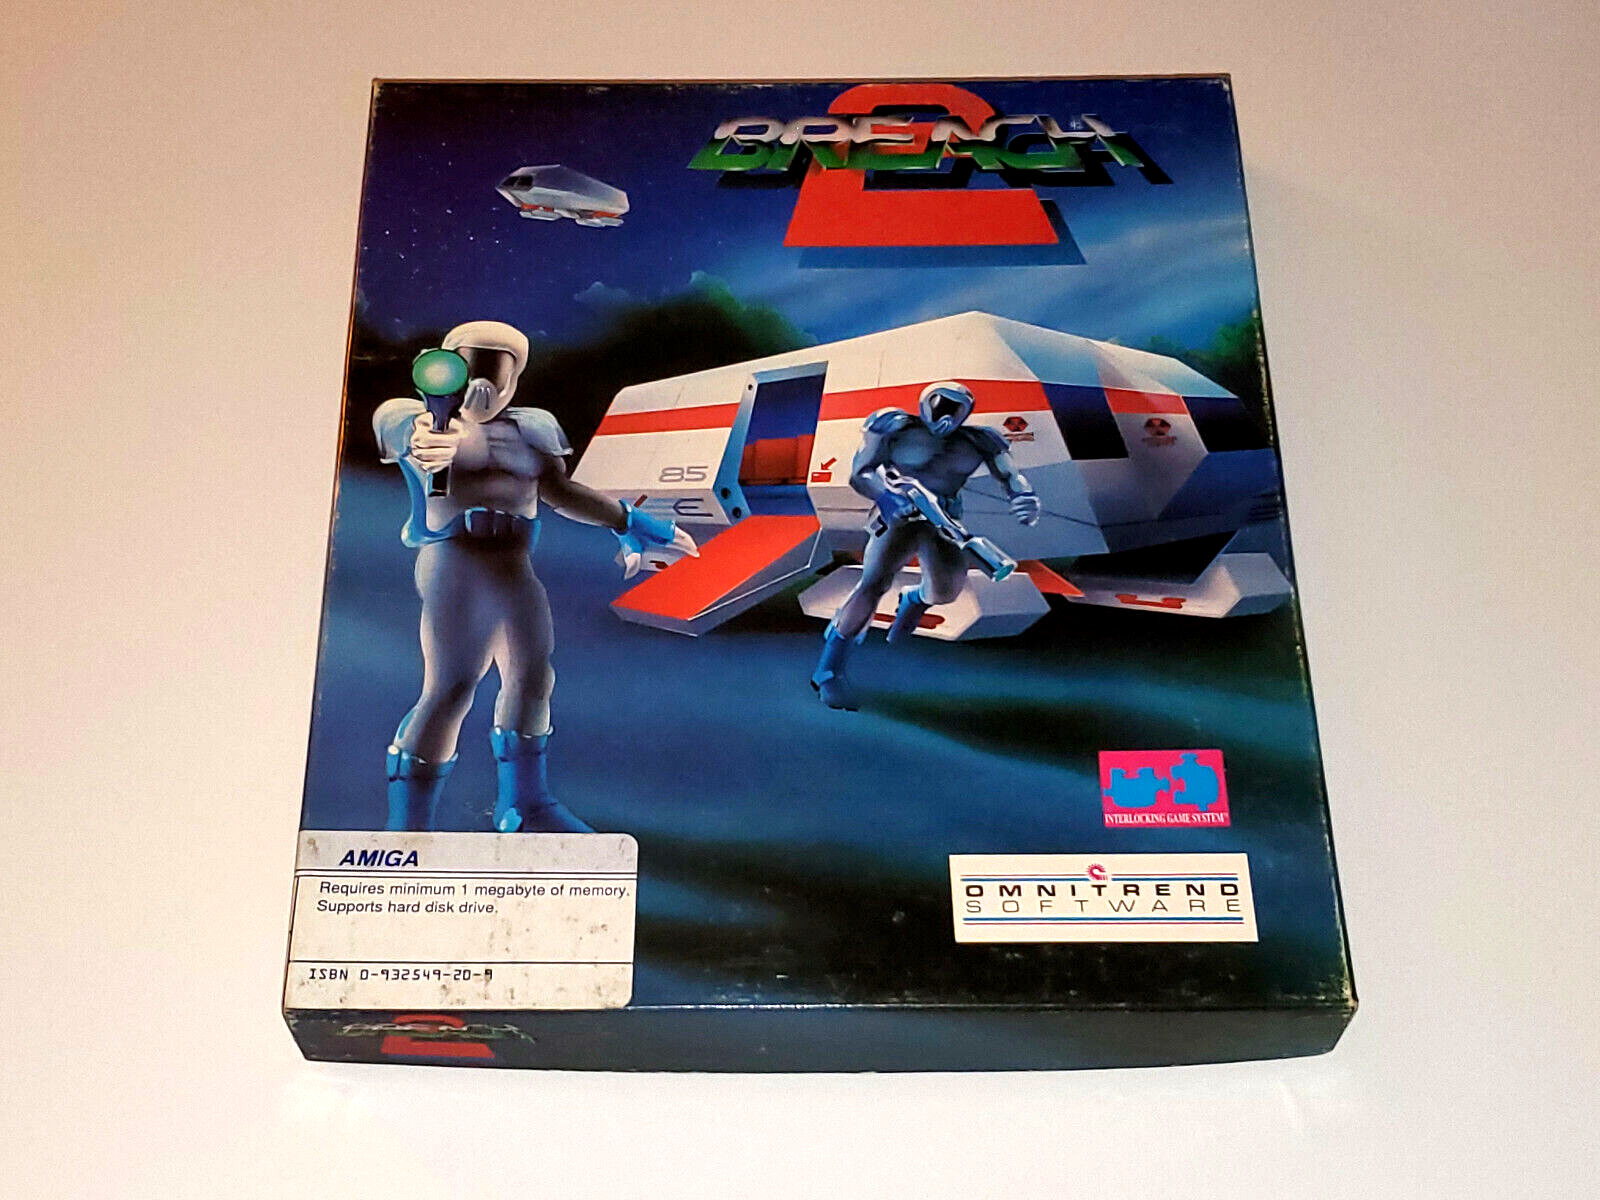 Breach II 2 (Amiga, 1990) Rare Cover Art, Vintage Game